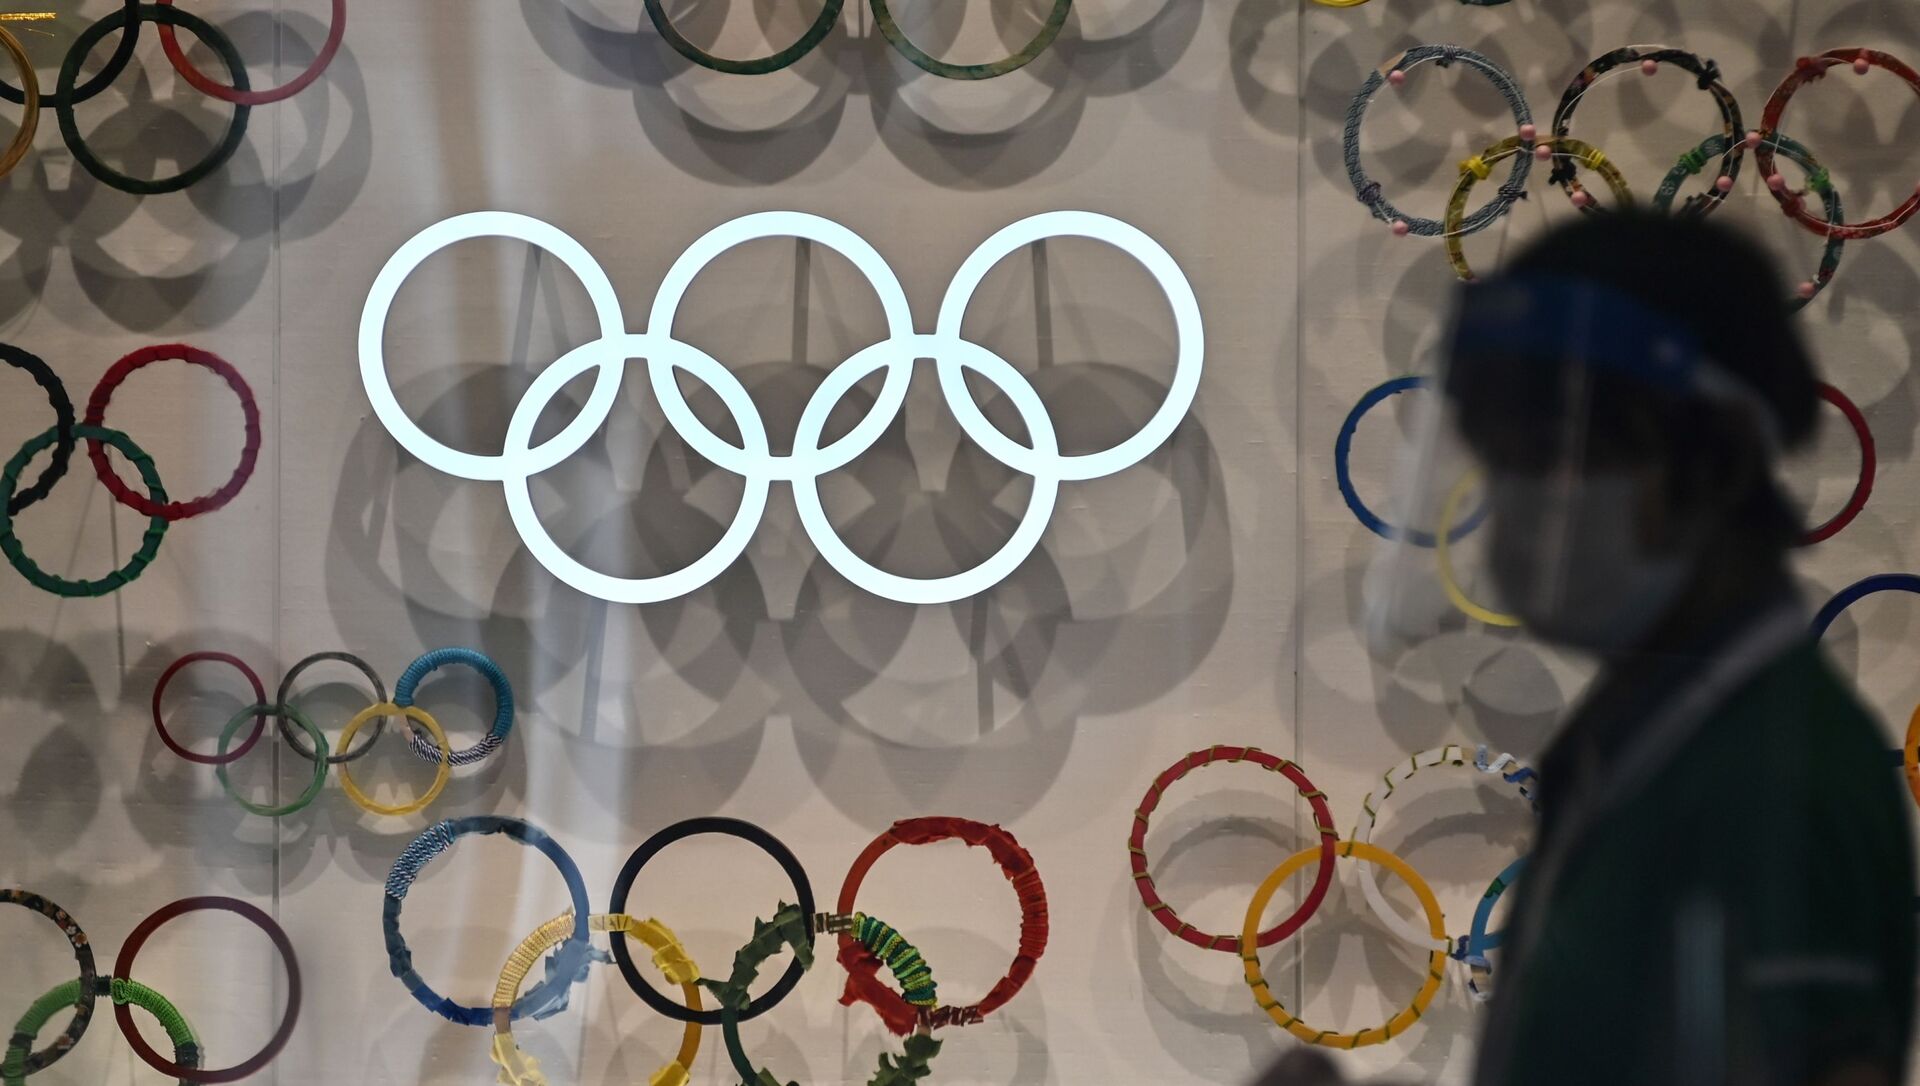 Логотип Олимпийских игр в Токио-2020, фото из архива - Sputnik Азербайджан, 1920, 08.07.2021